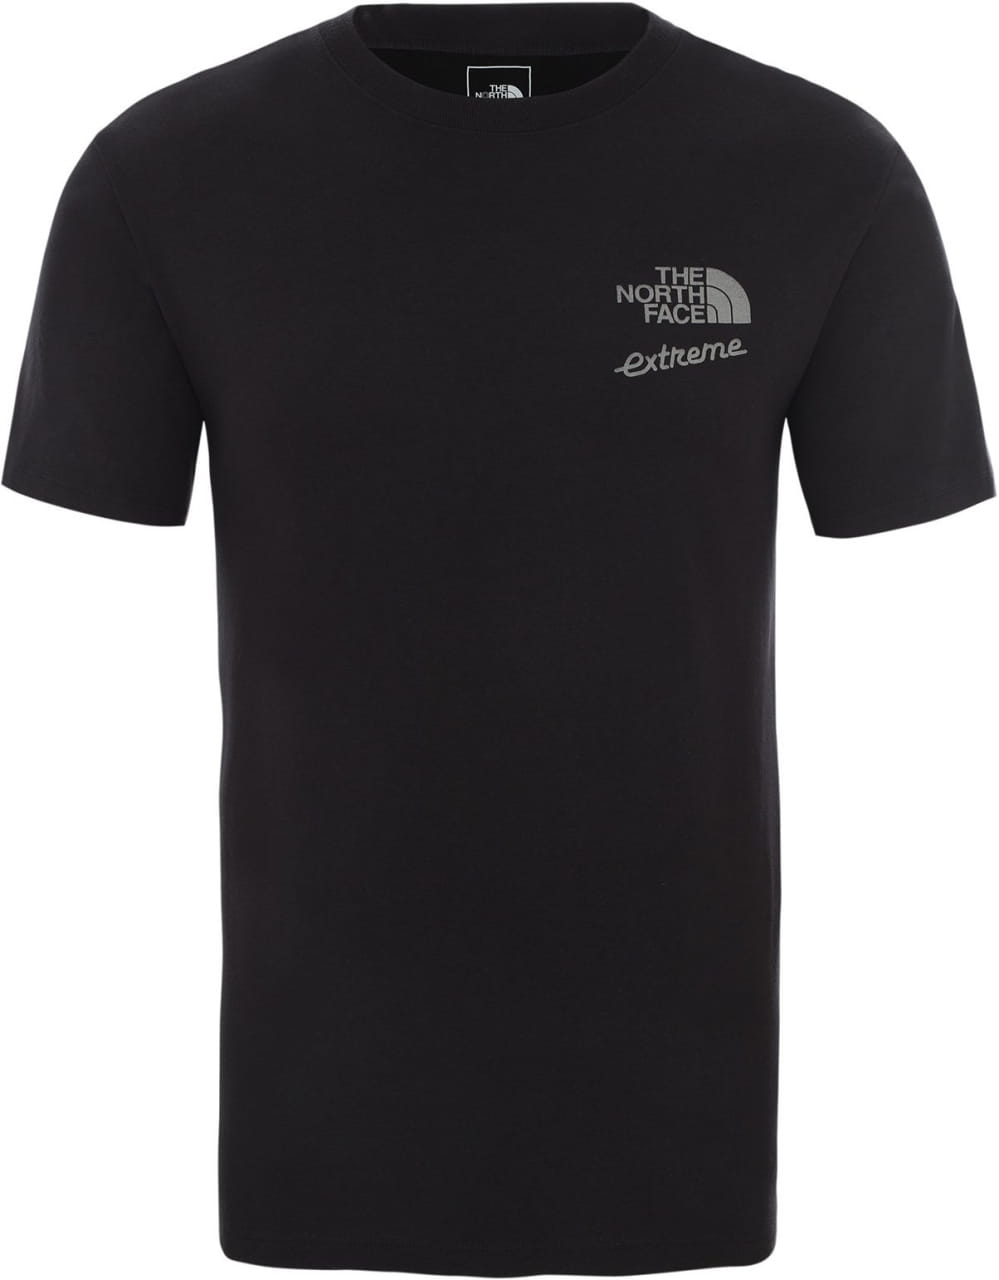 Pánské tričko The North Face Men's Extreme T-Shirt